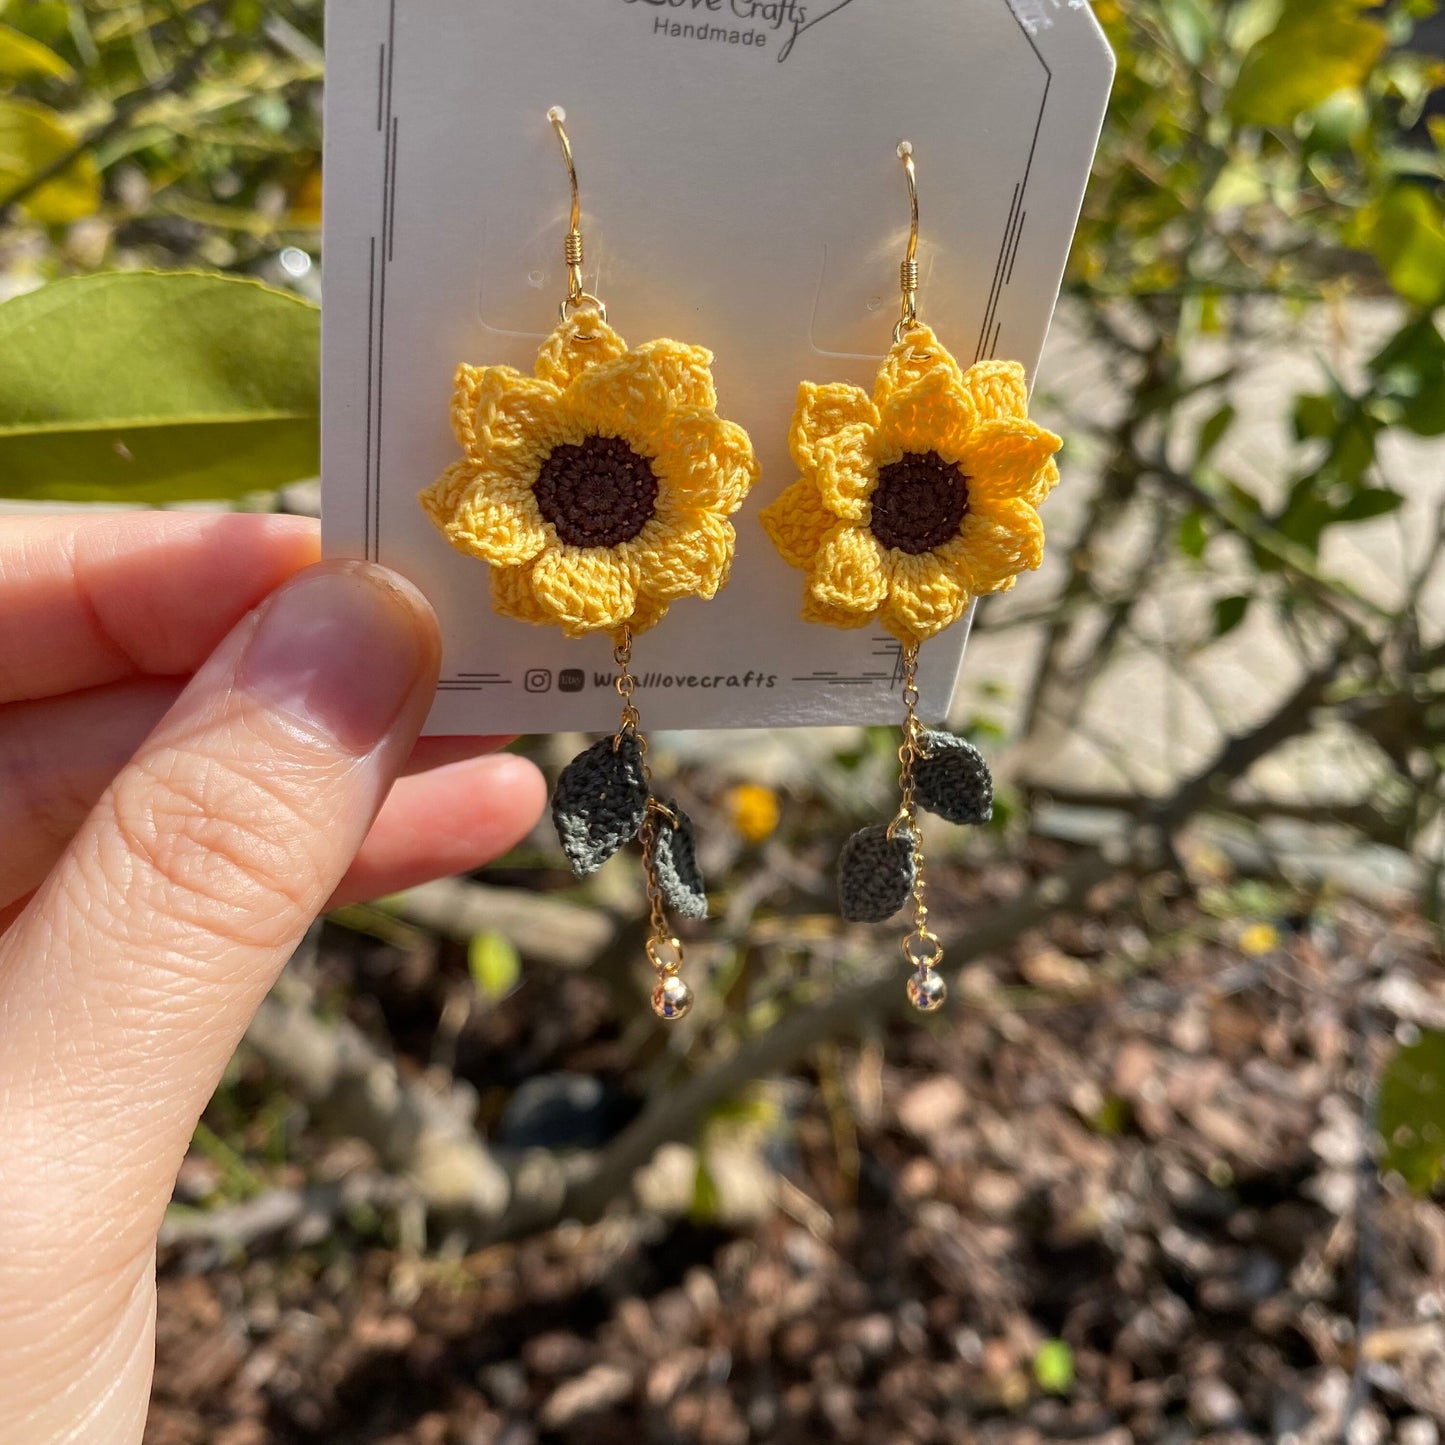 Larger Yellow Sunflower dangle earrings/Microcrochet/14k gold/fall flower gift for her/Knitting handmade jewelry/Ship from US